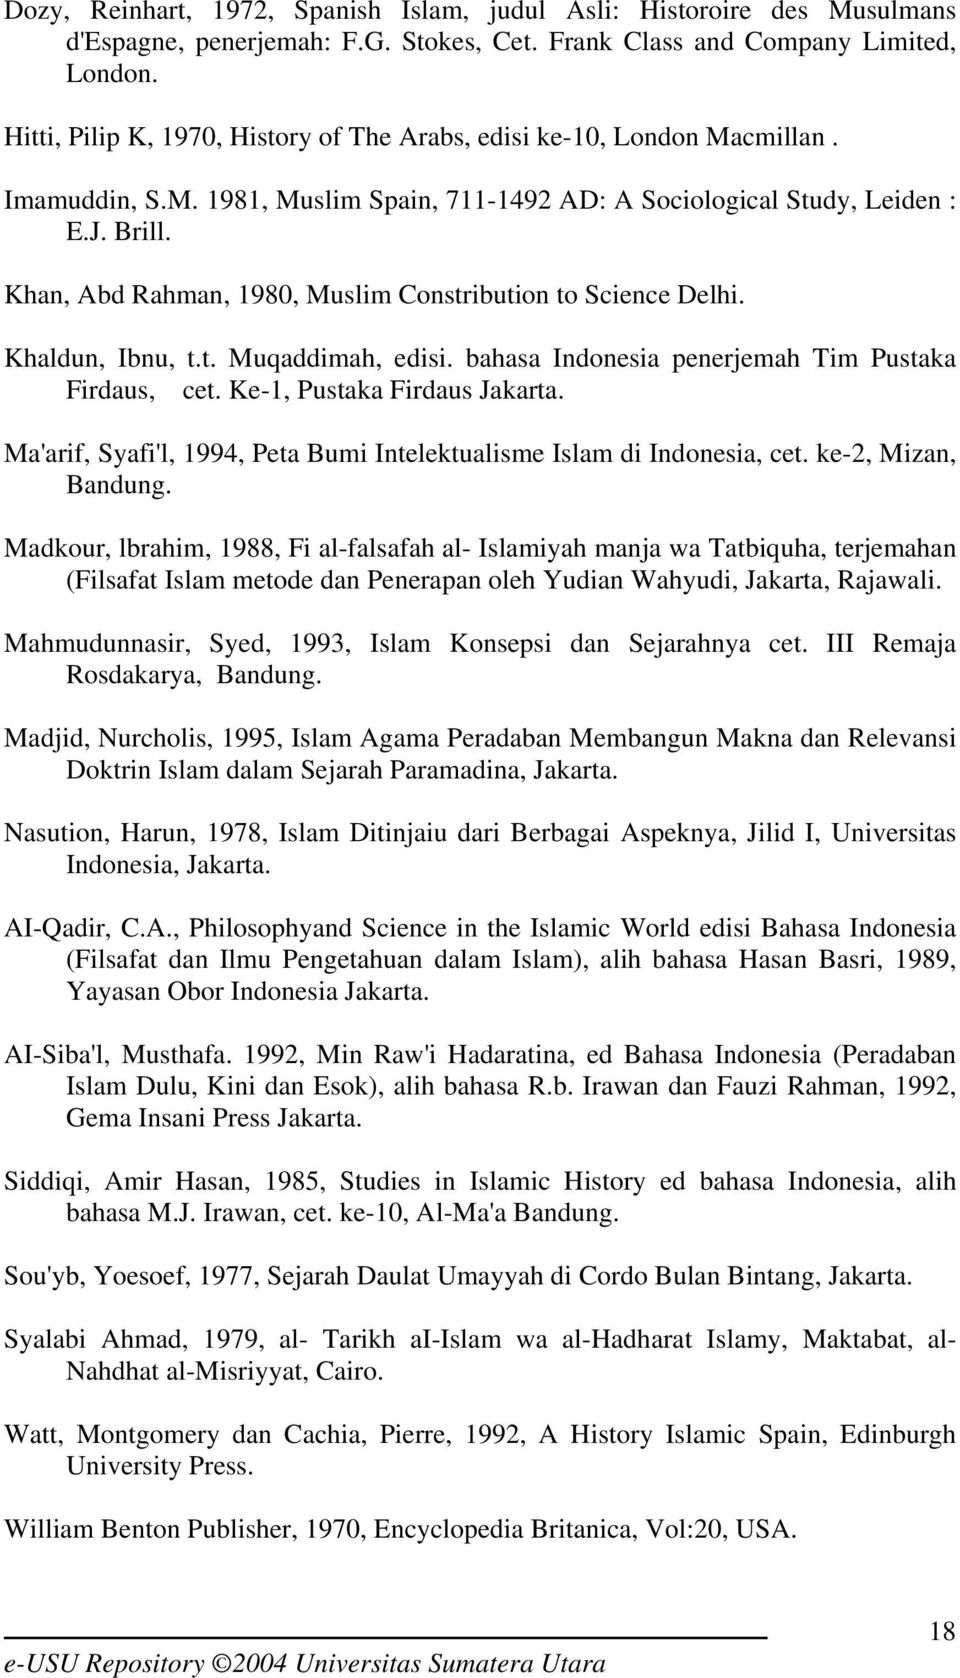 Khan, Abd Rahman, 1980, Muslim Constribution to Science Delhi. Khaldun, Ibnu, t.t. Muqaddimah, edisi. bahasa Indonesia penerjemah Tim Pustaka Firdaus, cet. Ke-1, Pustaka Firdaus Jakarta.